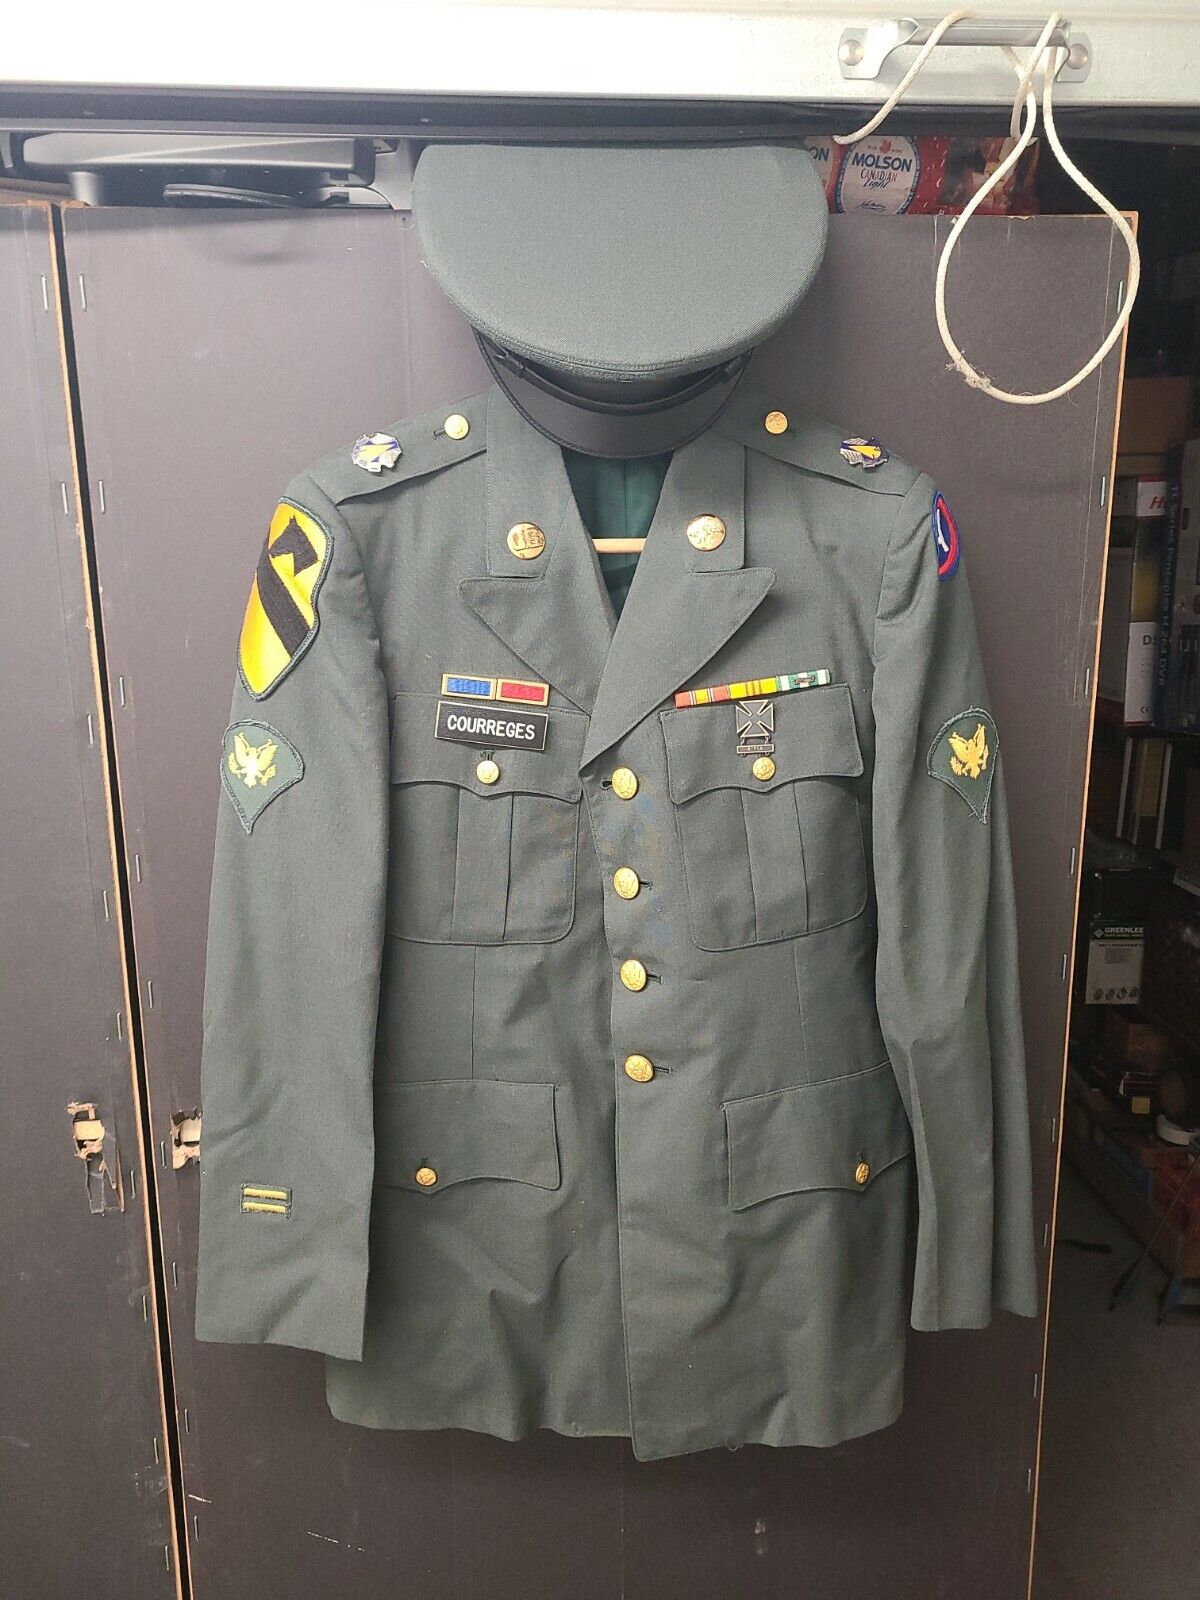 U.S. Army Dress Uniform, Vietnam, 1st Cavalry Division Specialist Rank Authentic